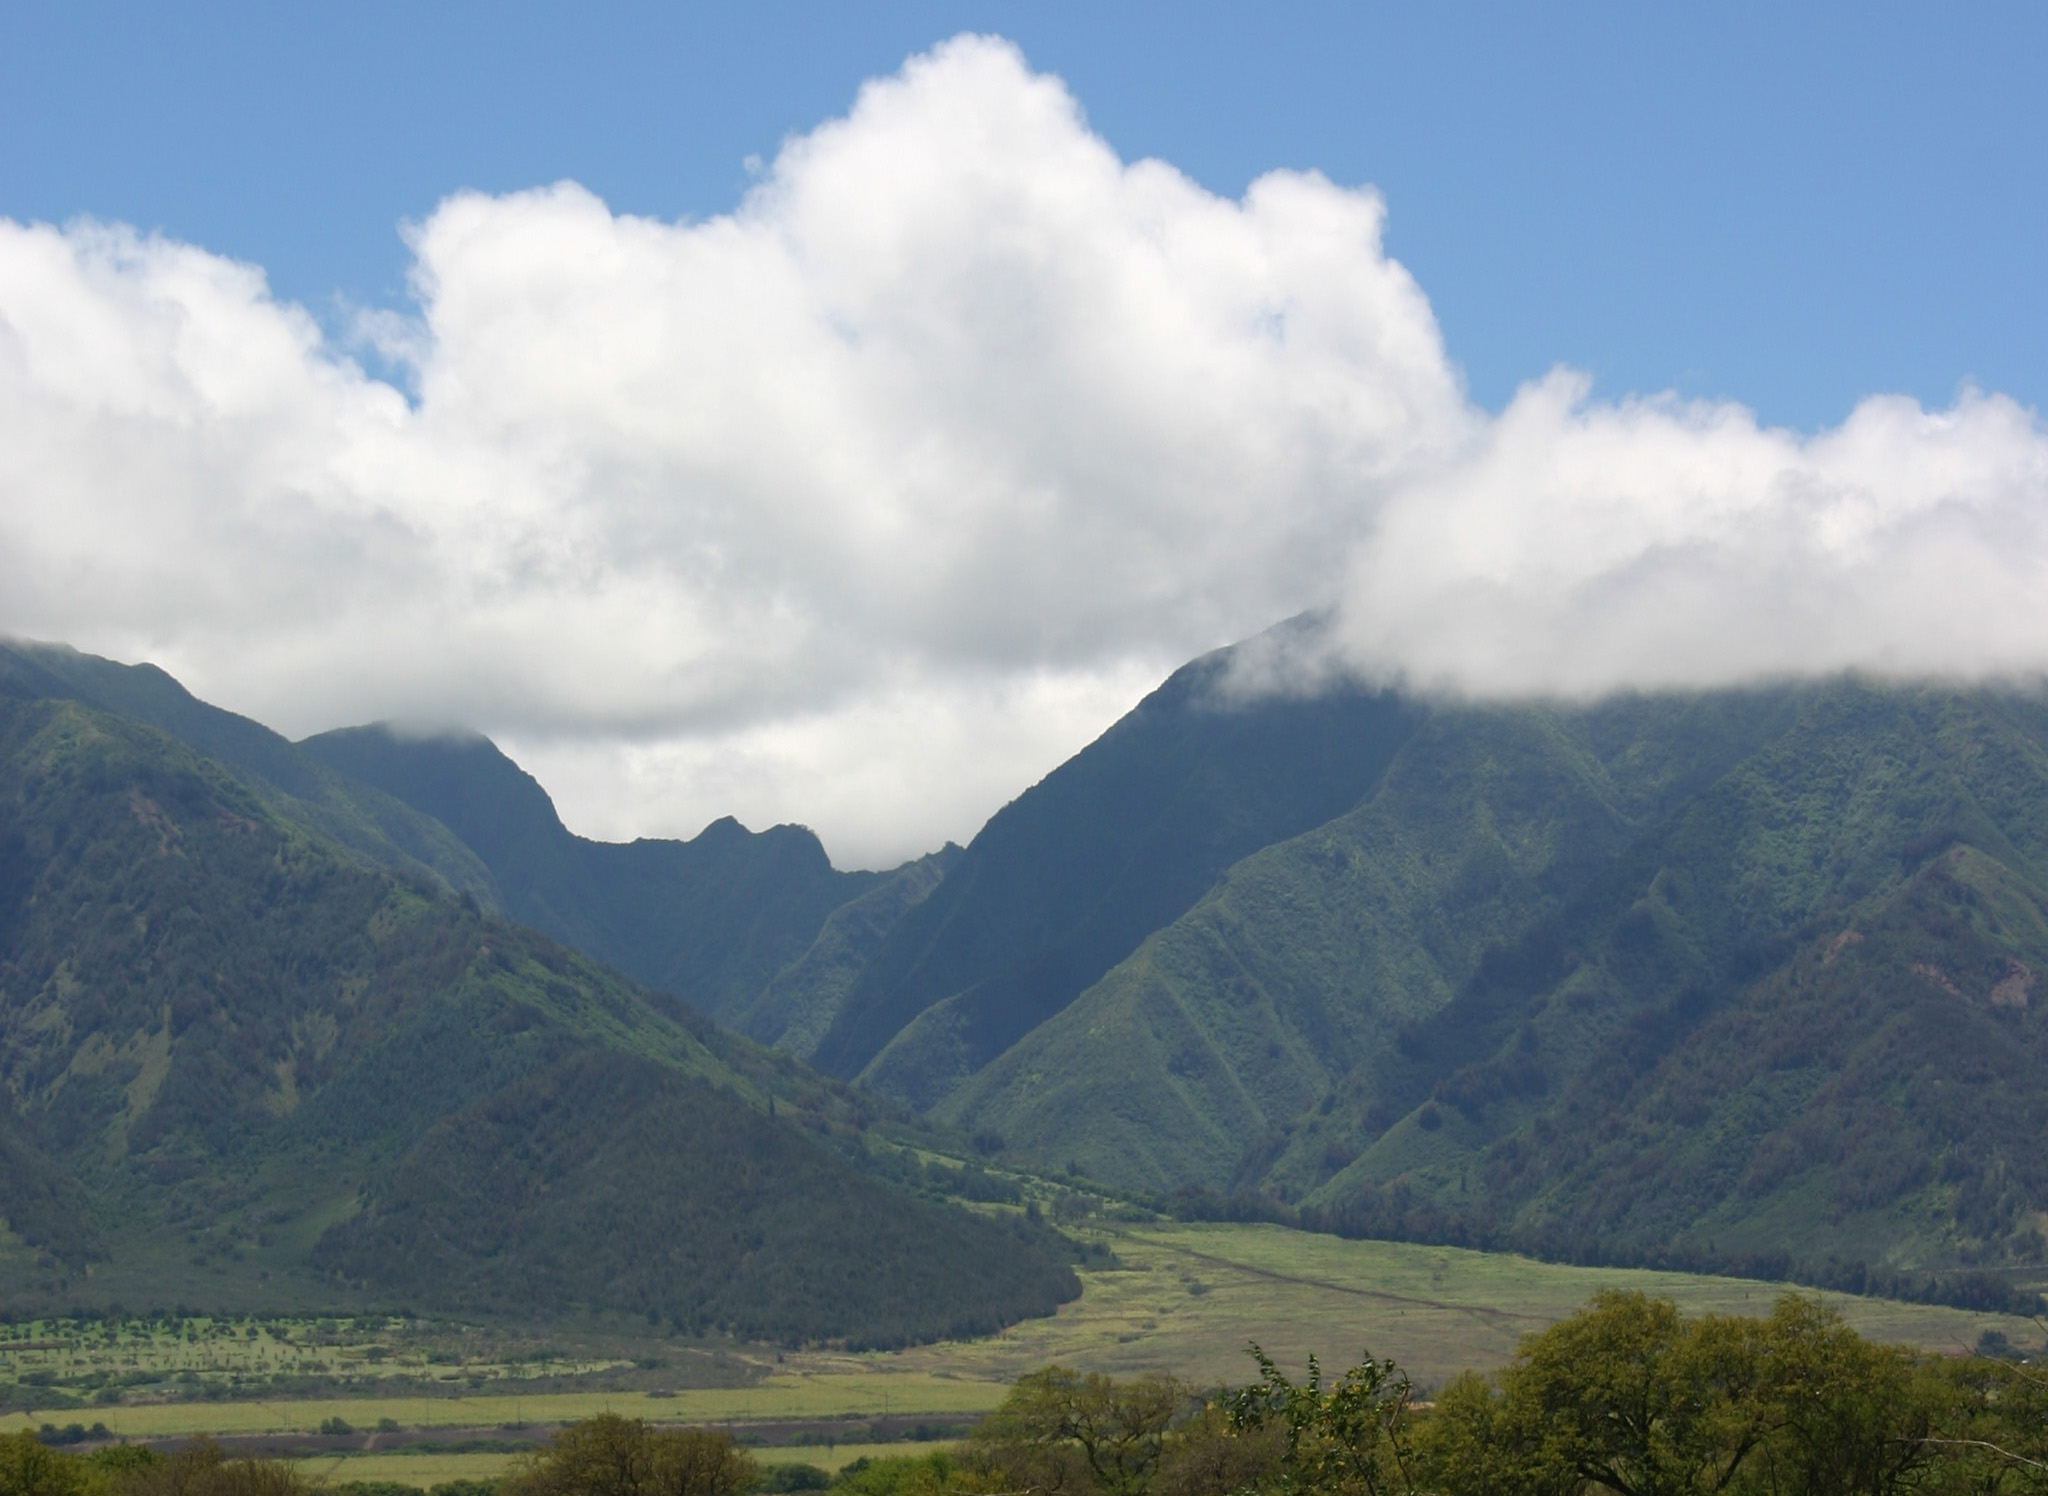 Maui Annual Weather Chart